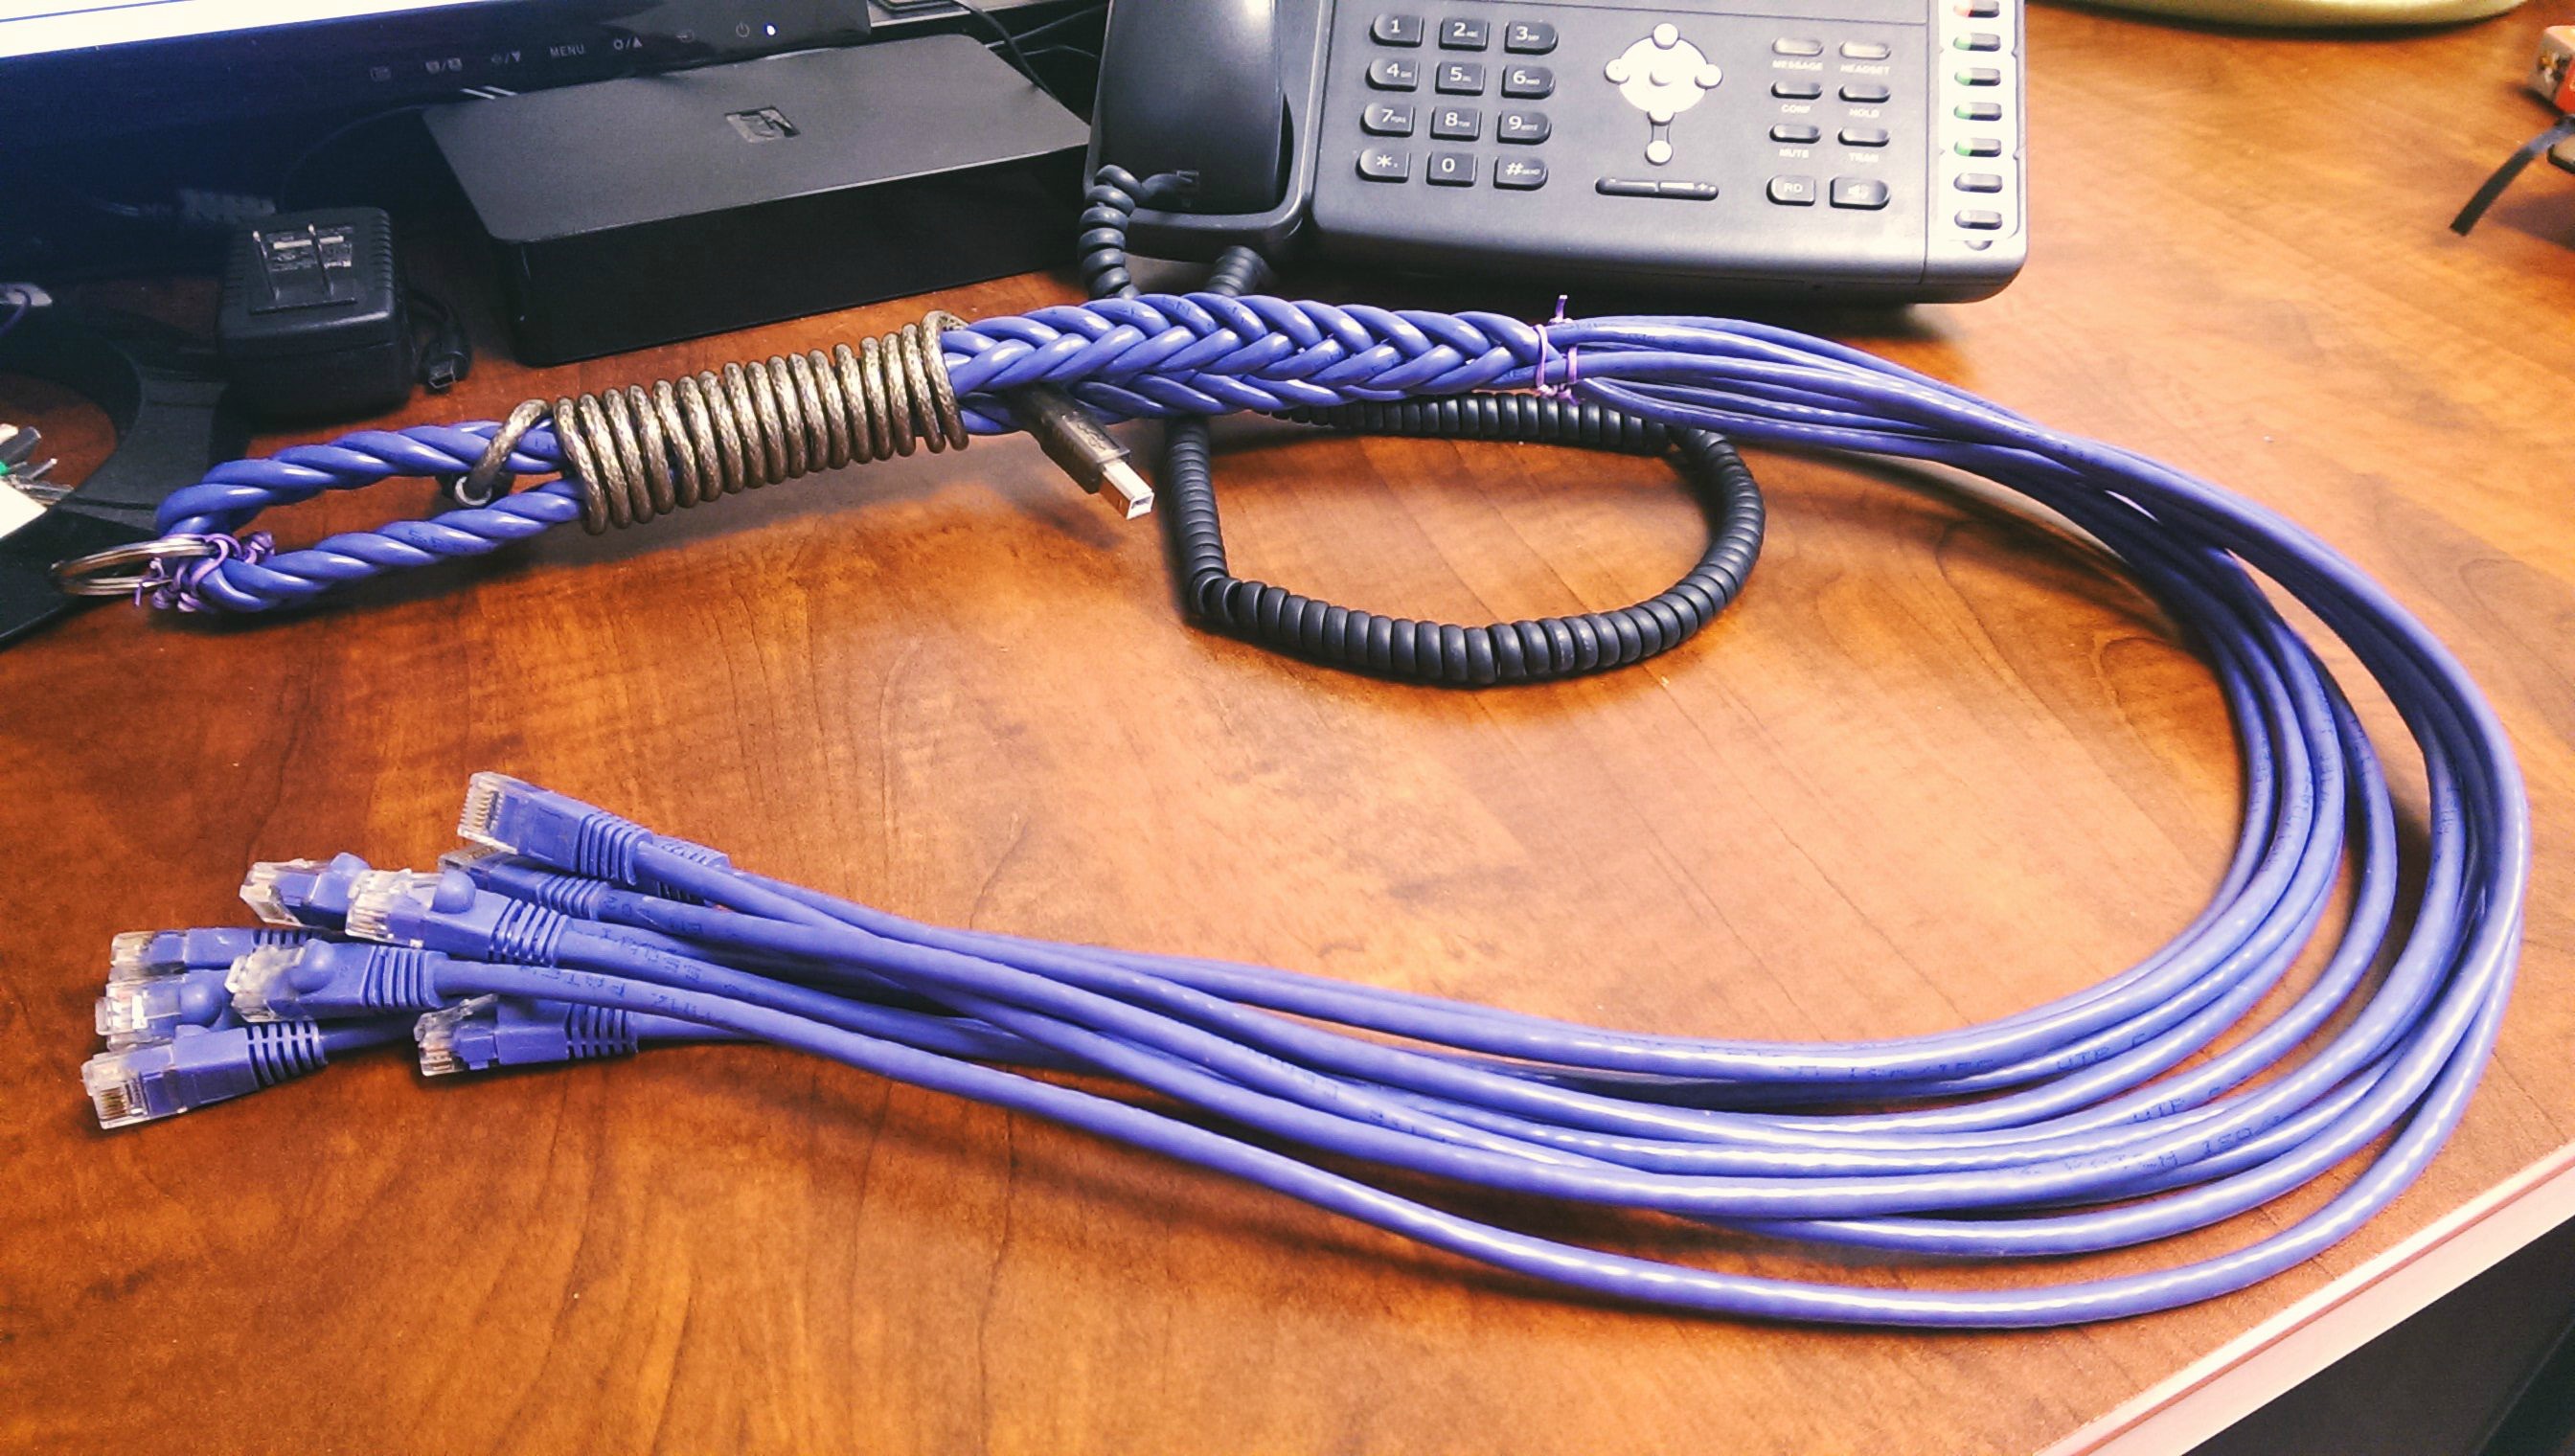 ethernet-cable-whip-weird-safe-word-404-1411436400Z.jpg